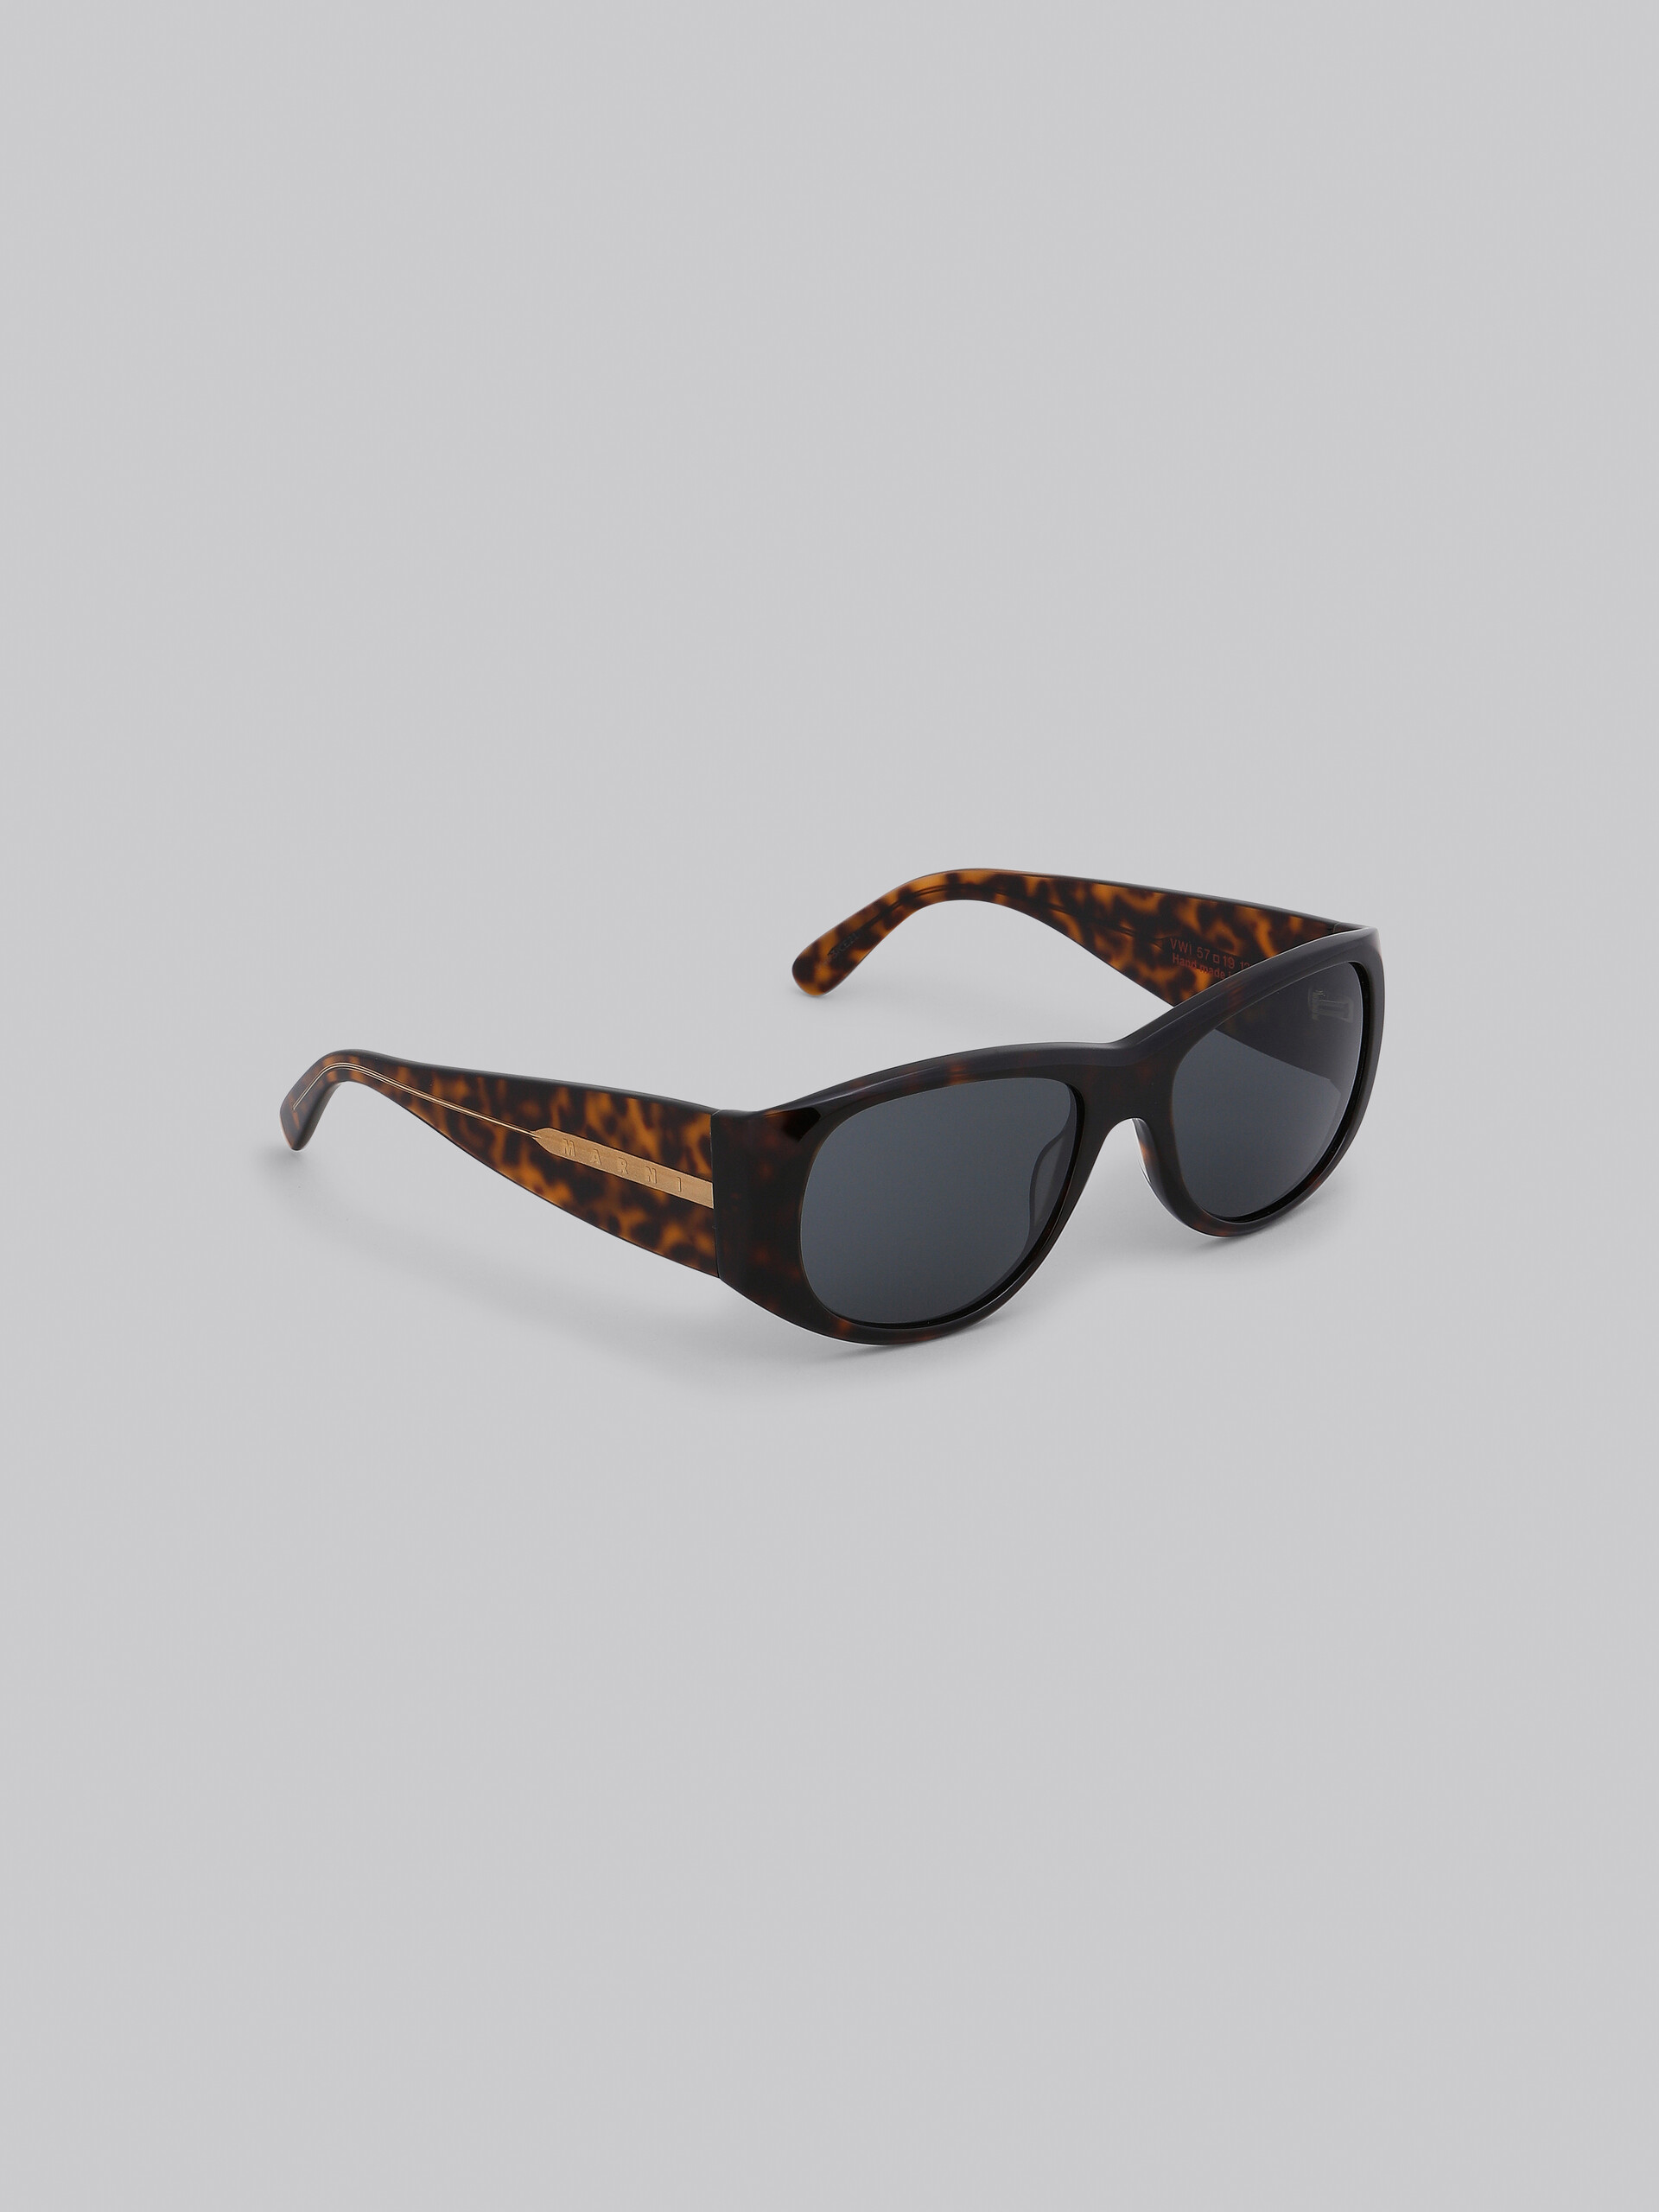 Black Orinoco River acetate sunglasses - Optical - Image 3